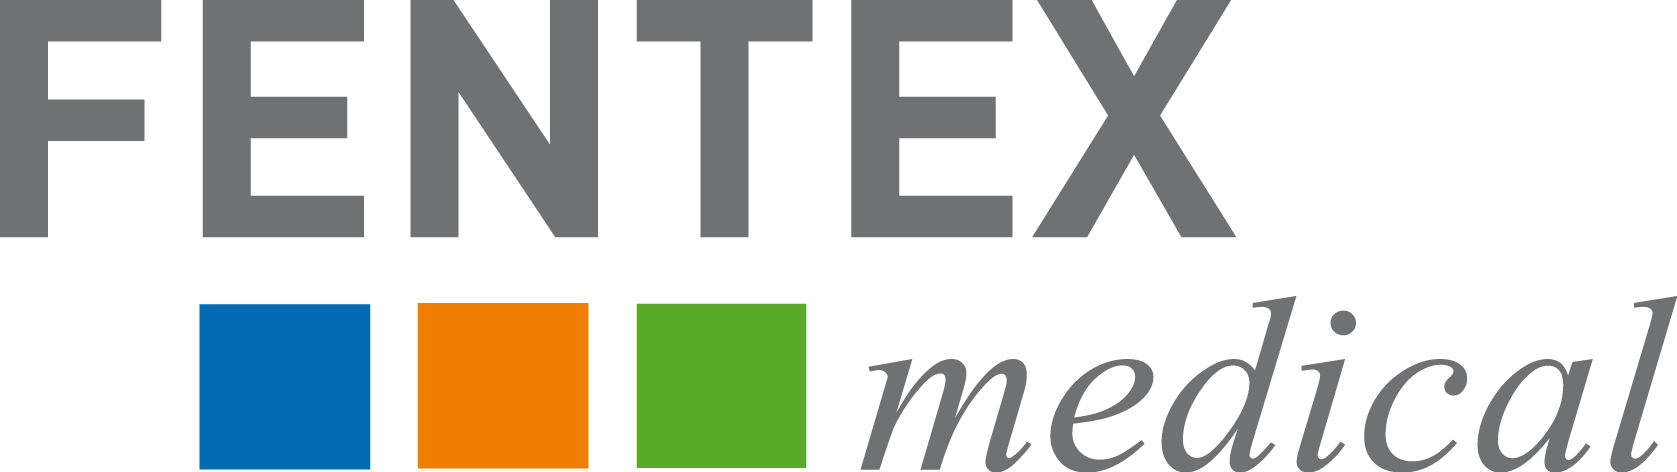 Fentex Logo